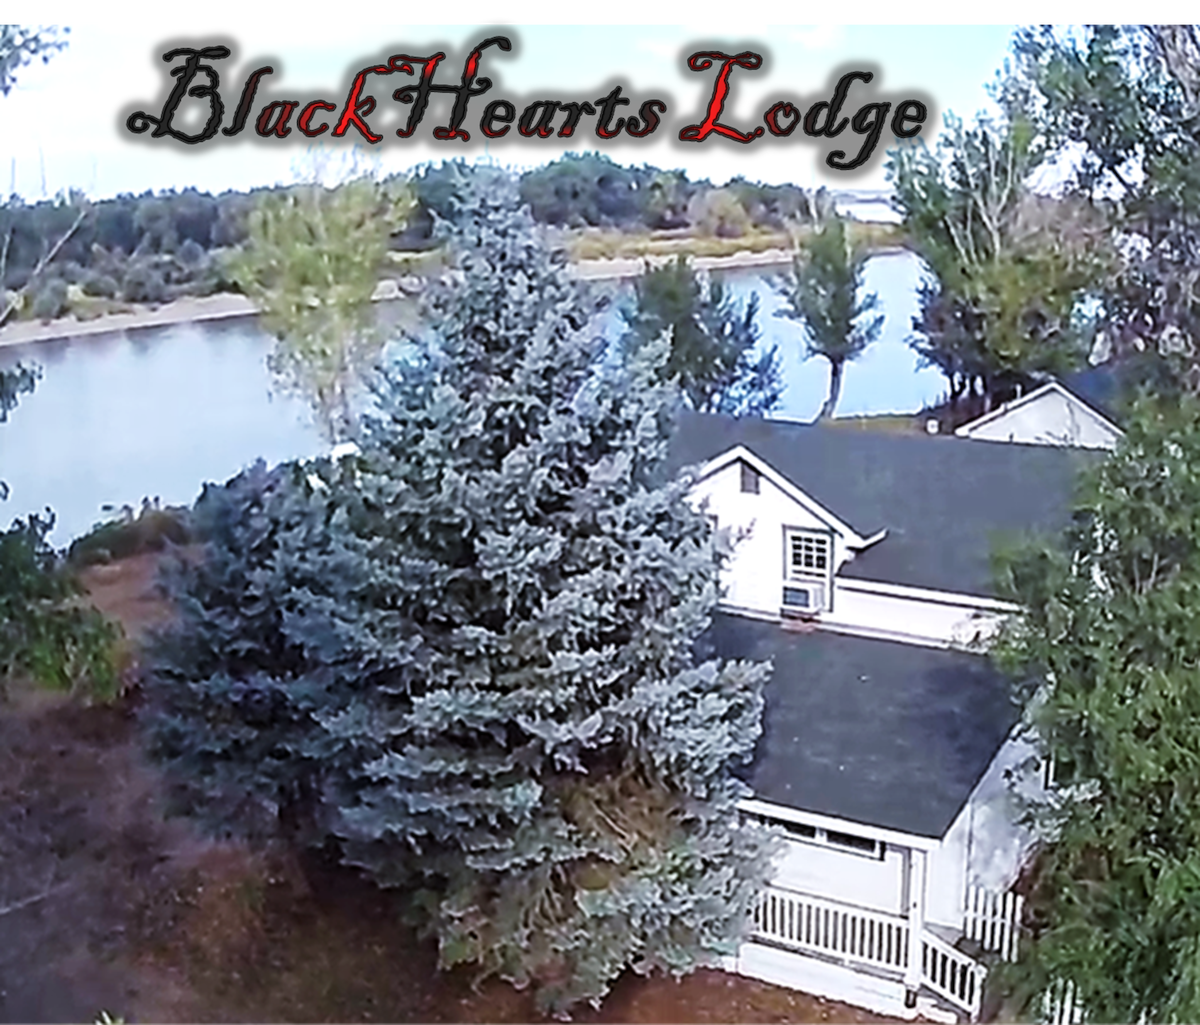 Blackhearts Lodge-Basilones平房